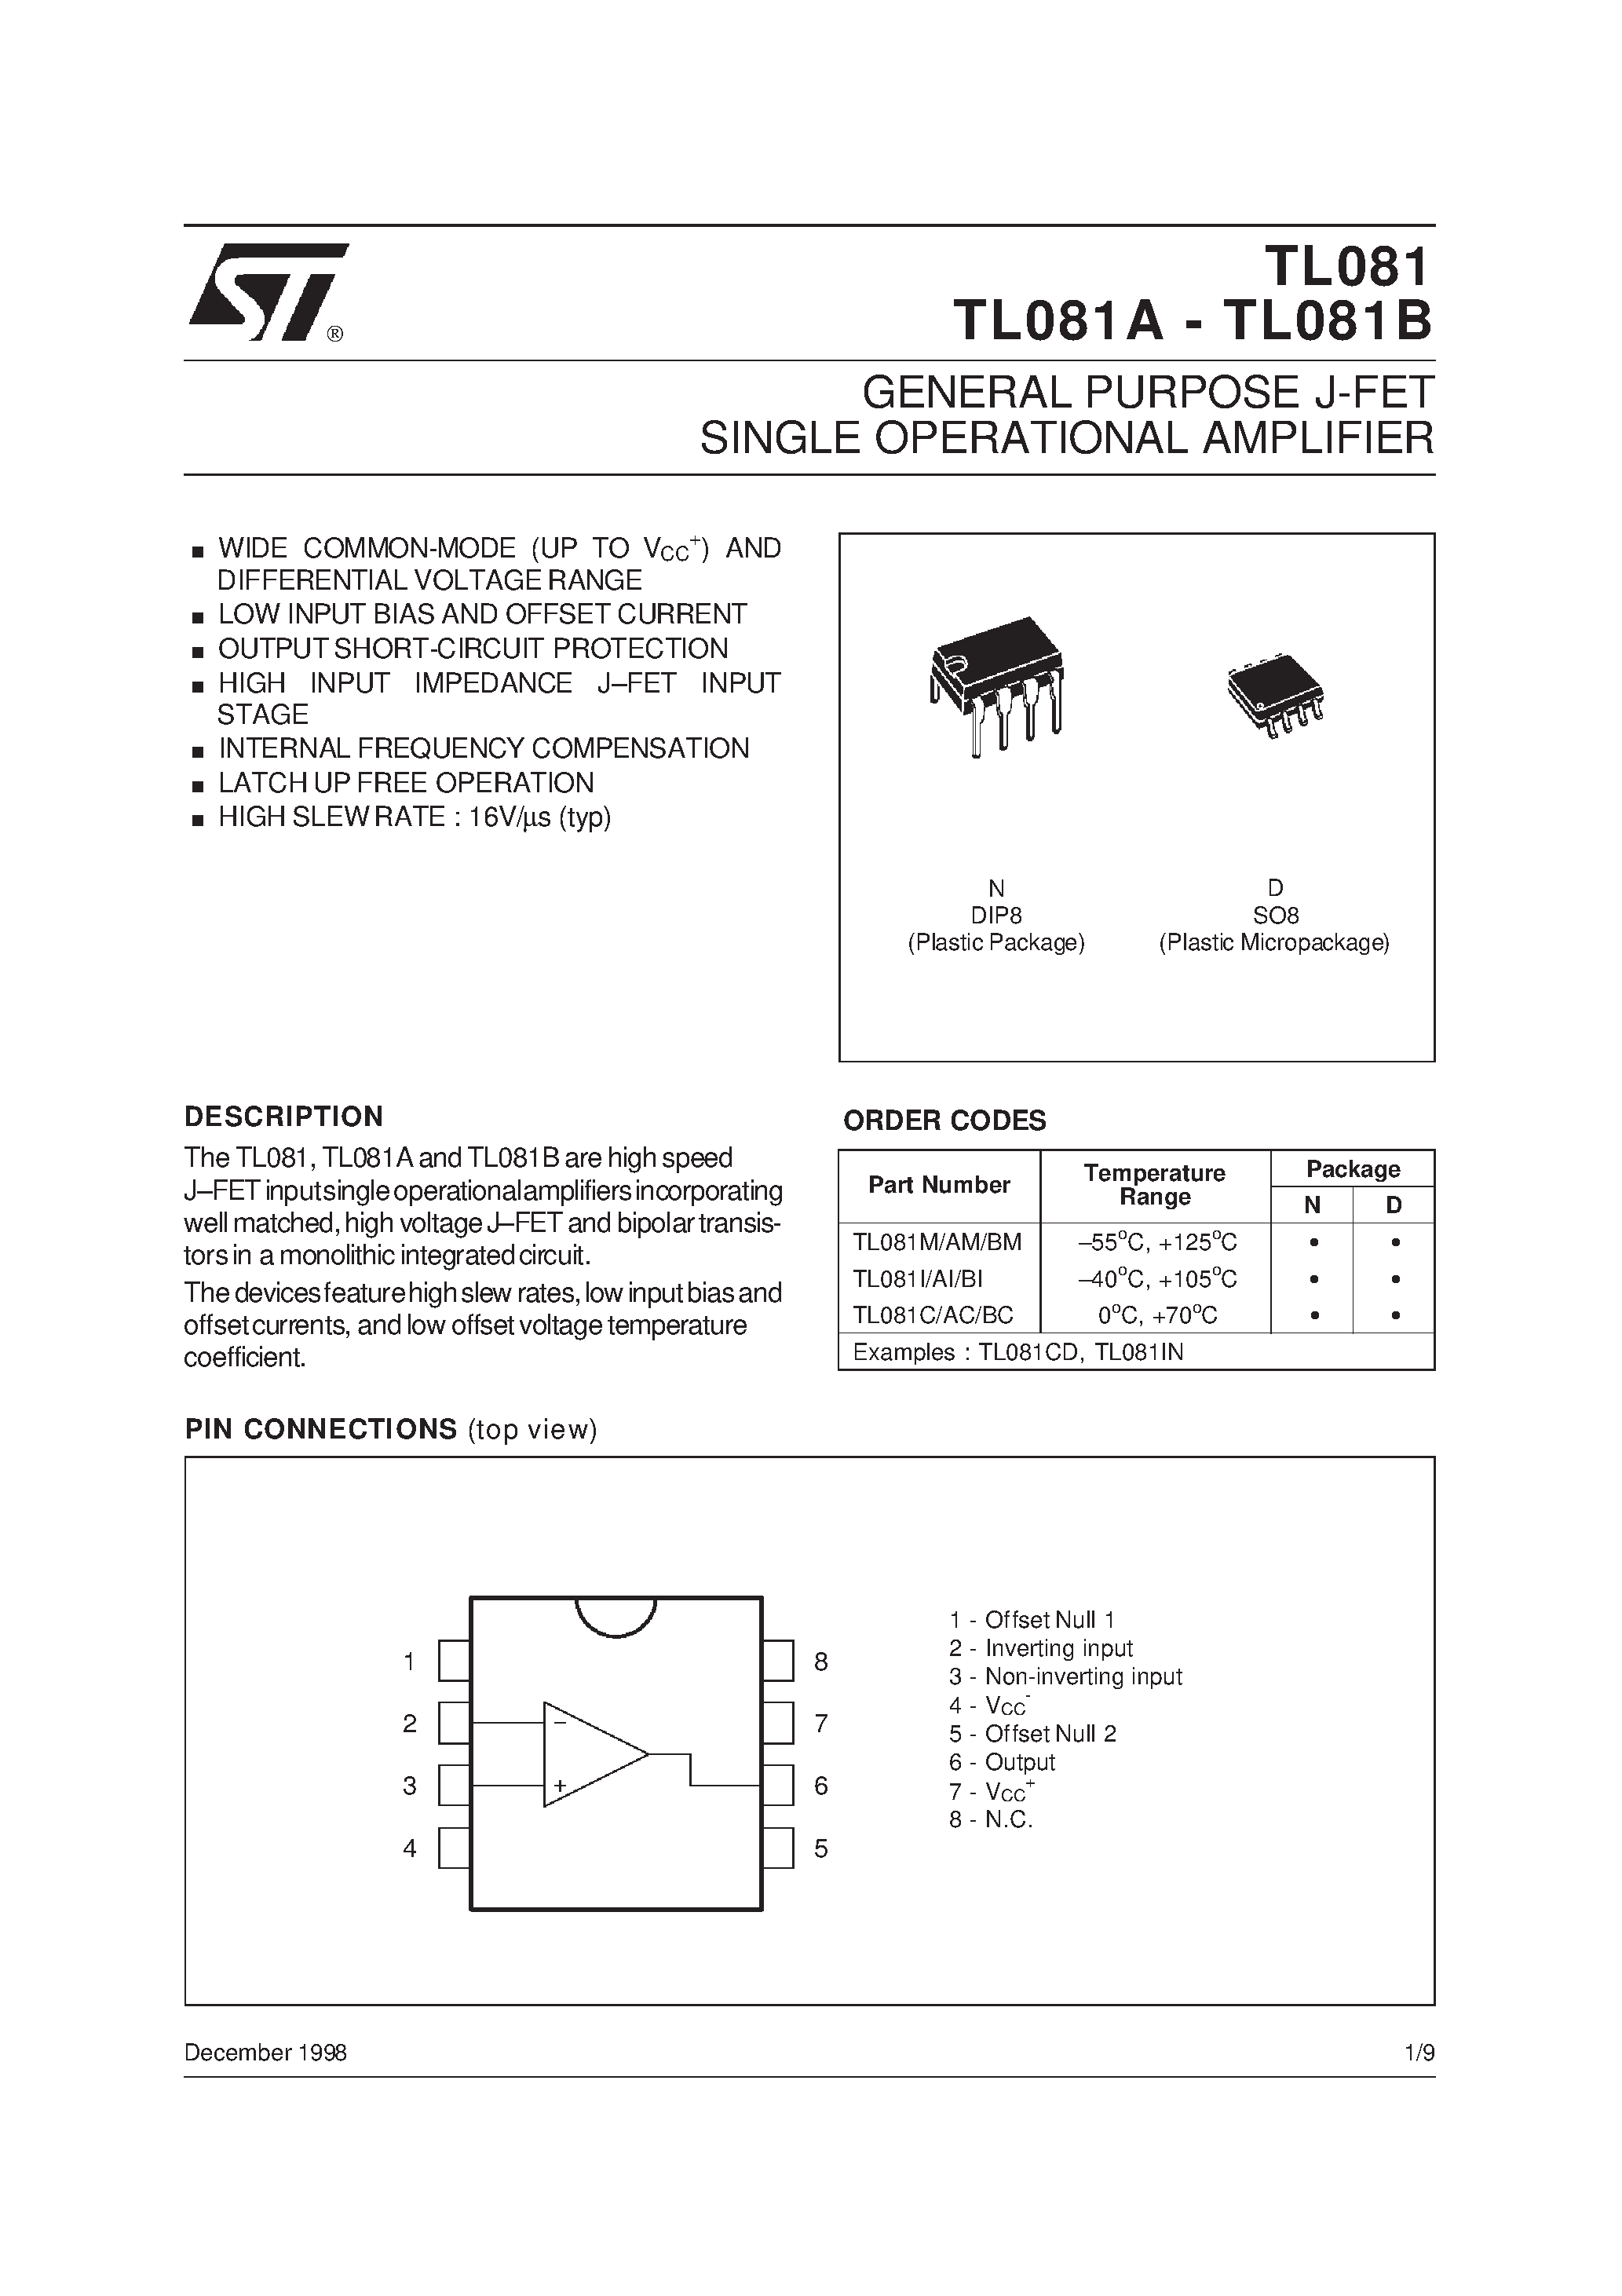 Datasheet TL081C - GENERAL PURPOSE J-FET SINGLE OPERATIONAL AMPLIFIER page 1